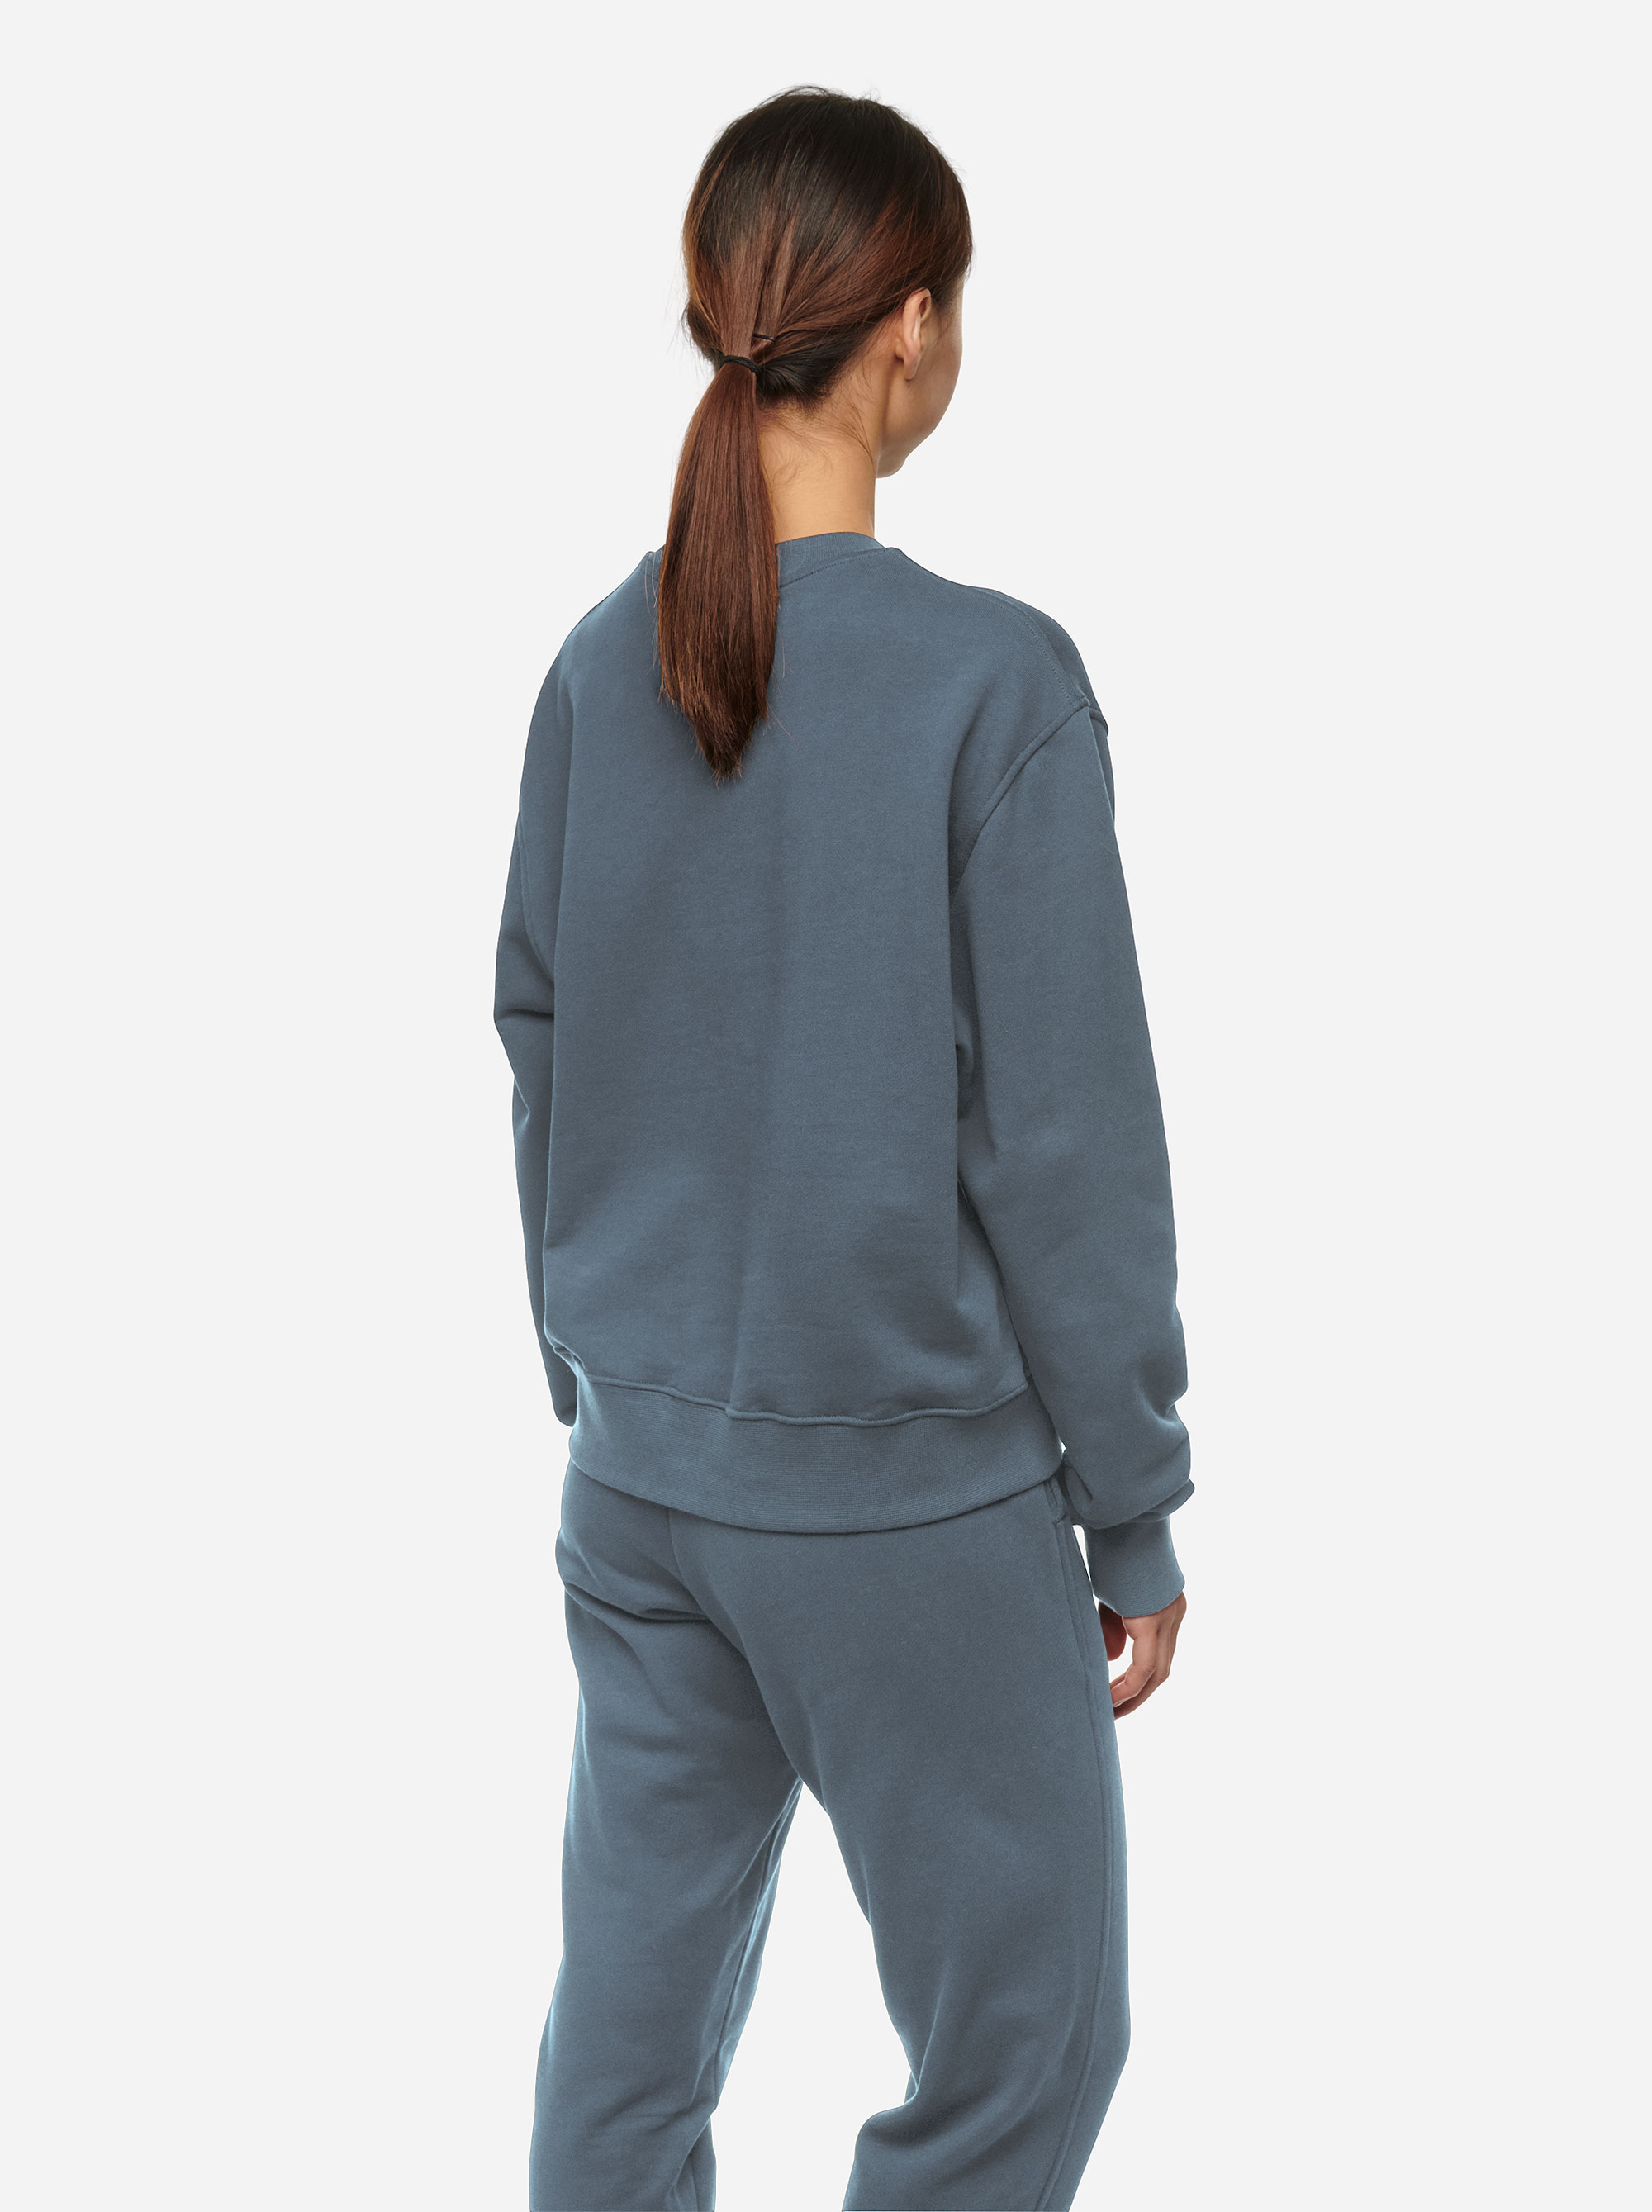 Teym - The Sweatshirt - Women - Blue Grey - 2